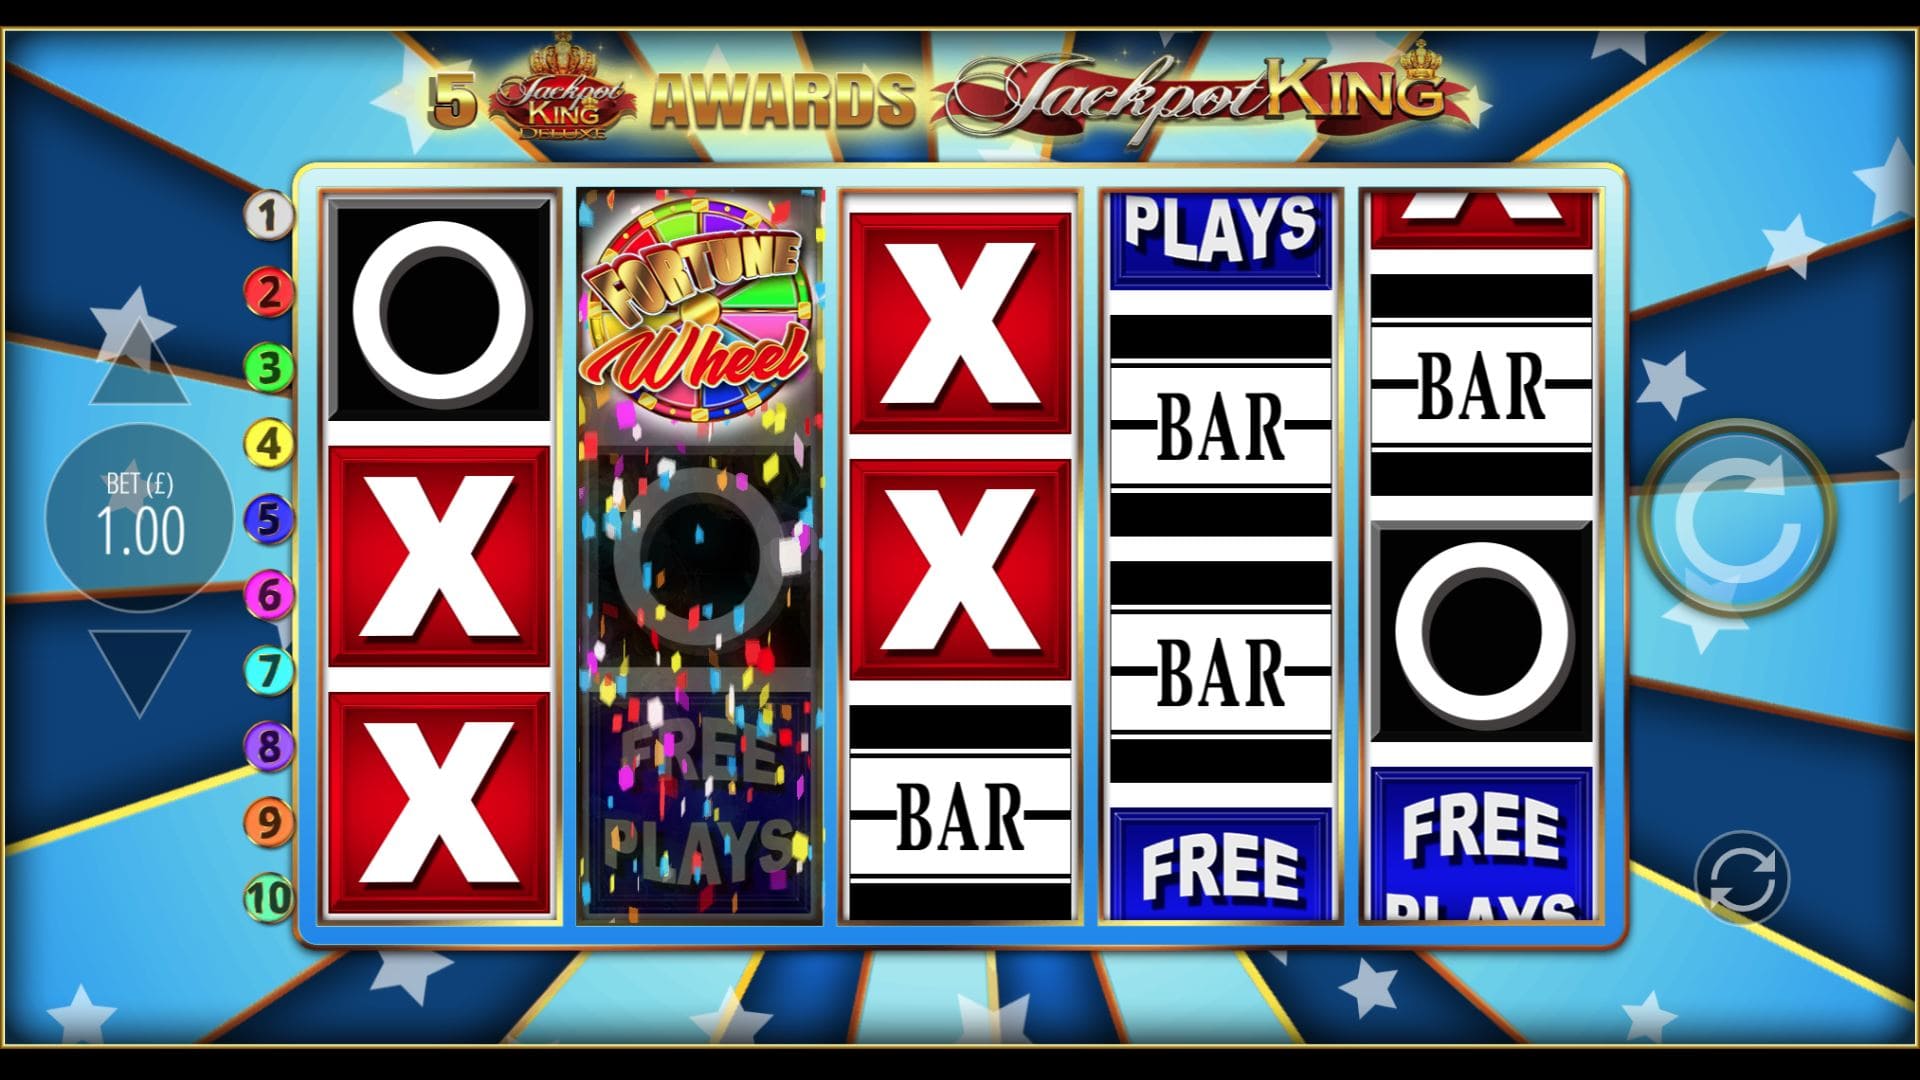 Mega Bars Fortune Wheel Jackpot King Free Spins